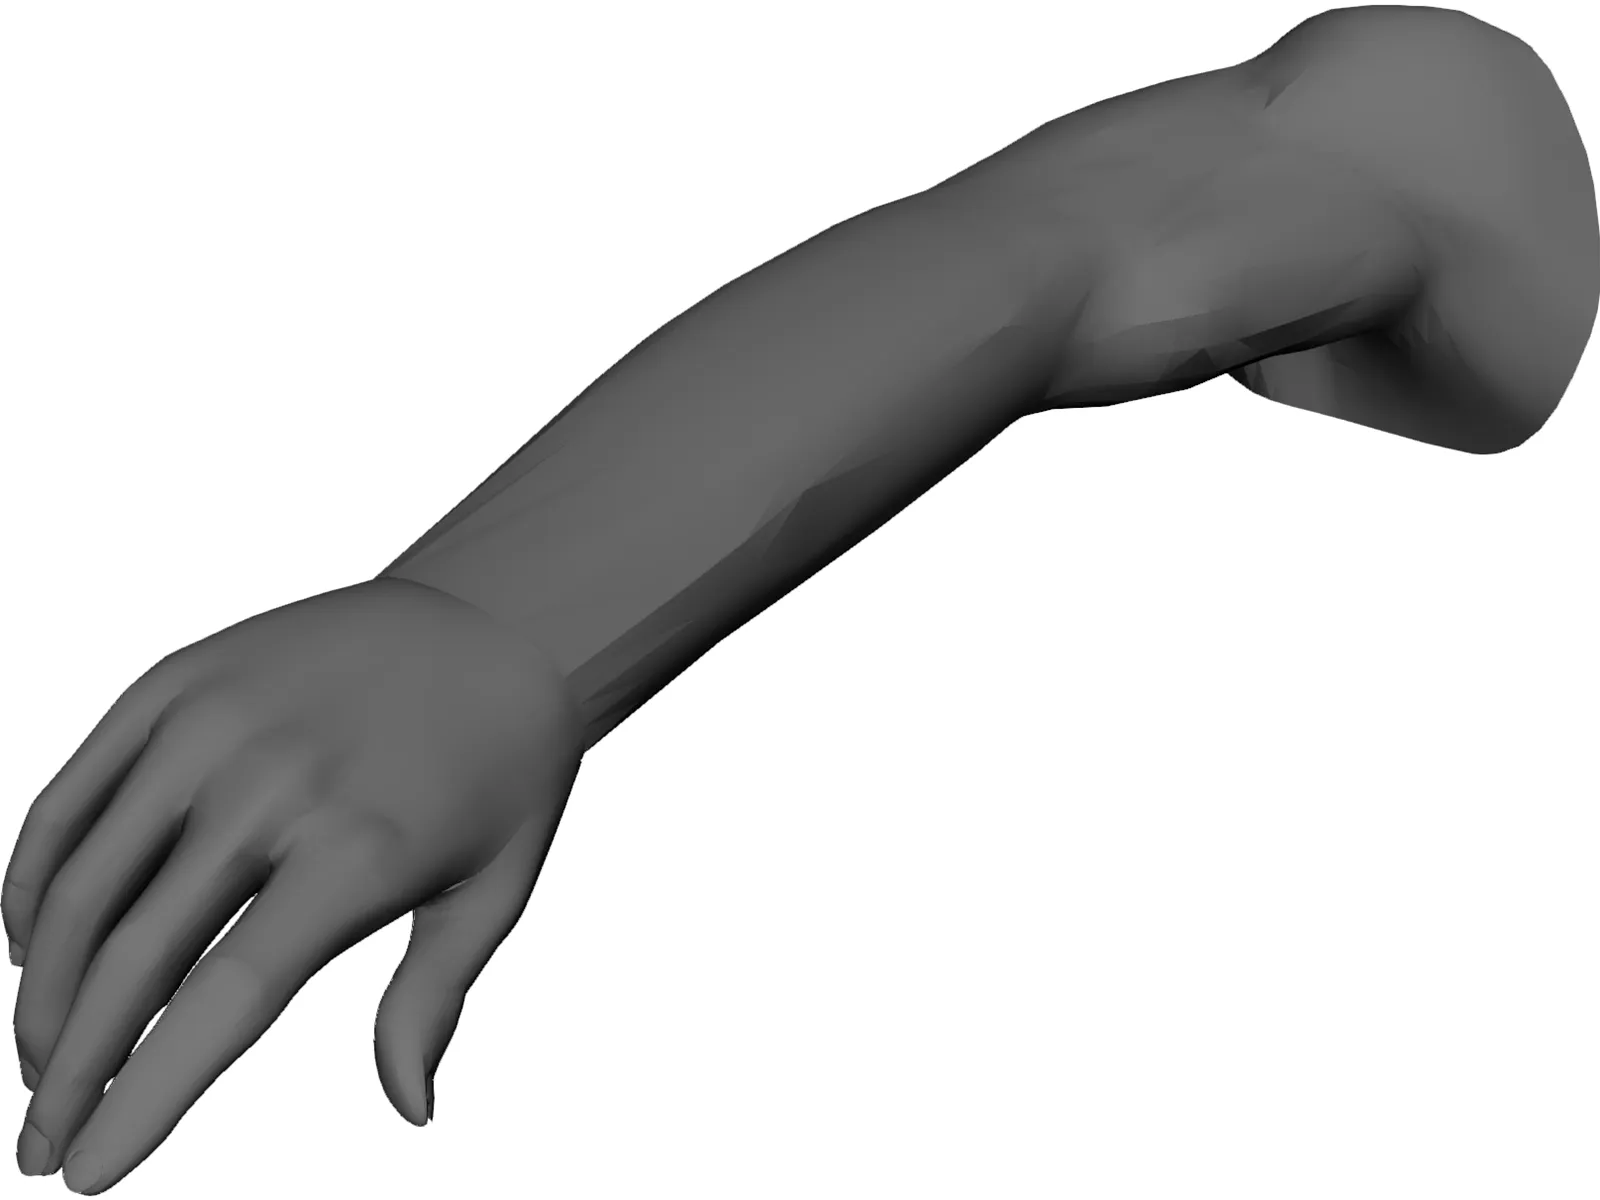 Arm Male 3D Model